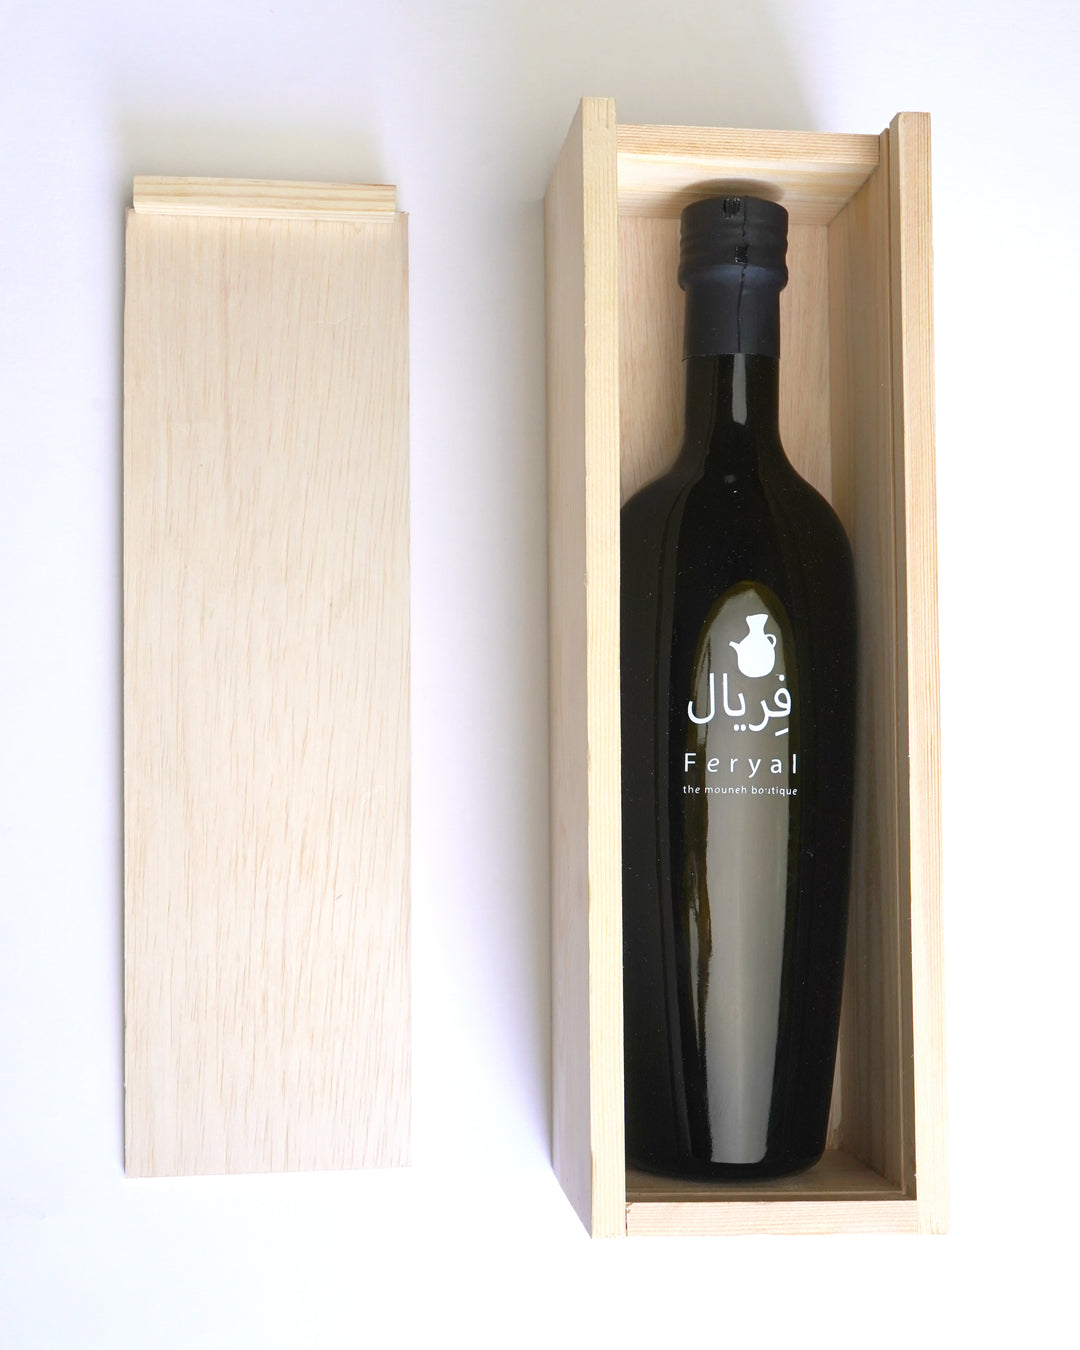 Olive Oil Bottle & Wooden Box